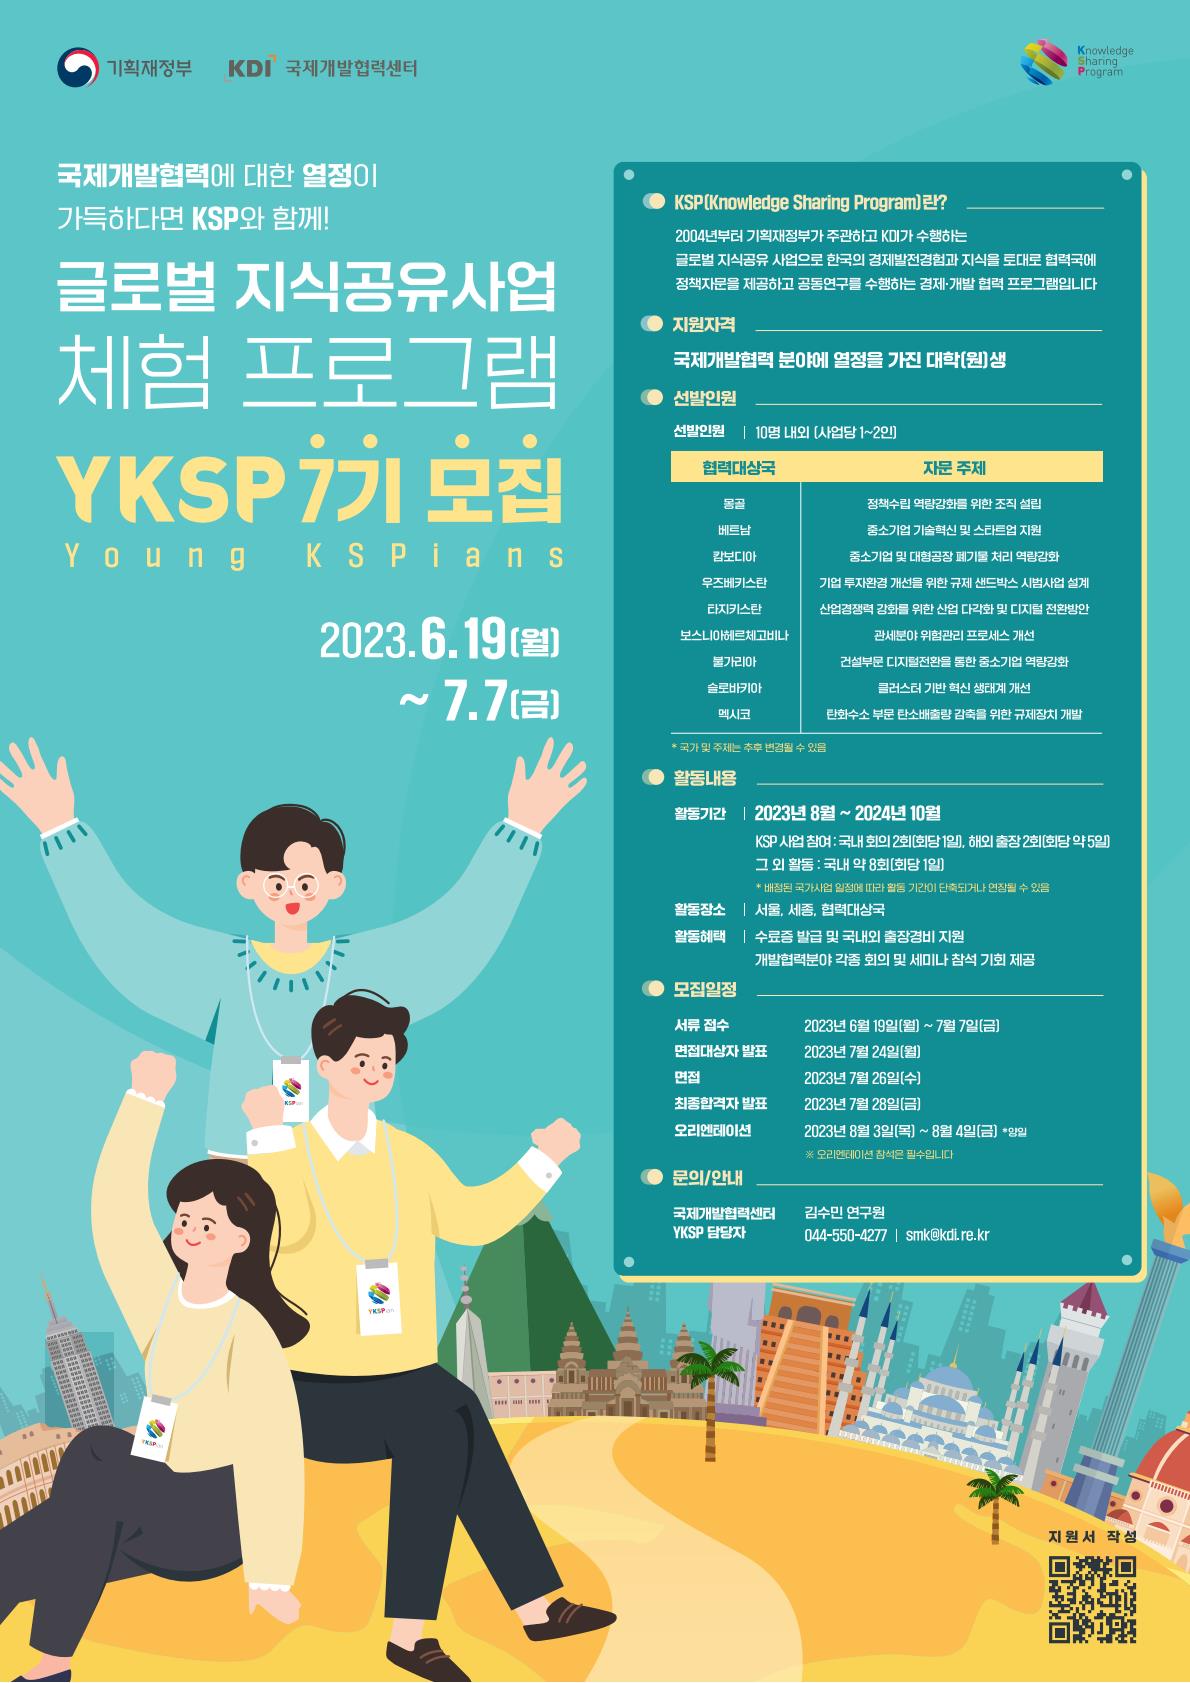 YKSP 7기 모집 홍보 포스터